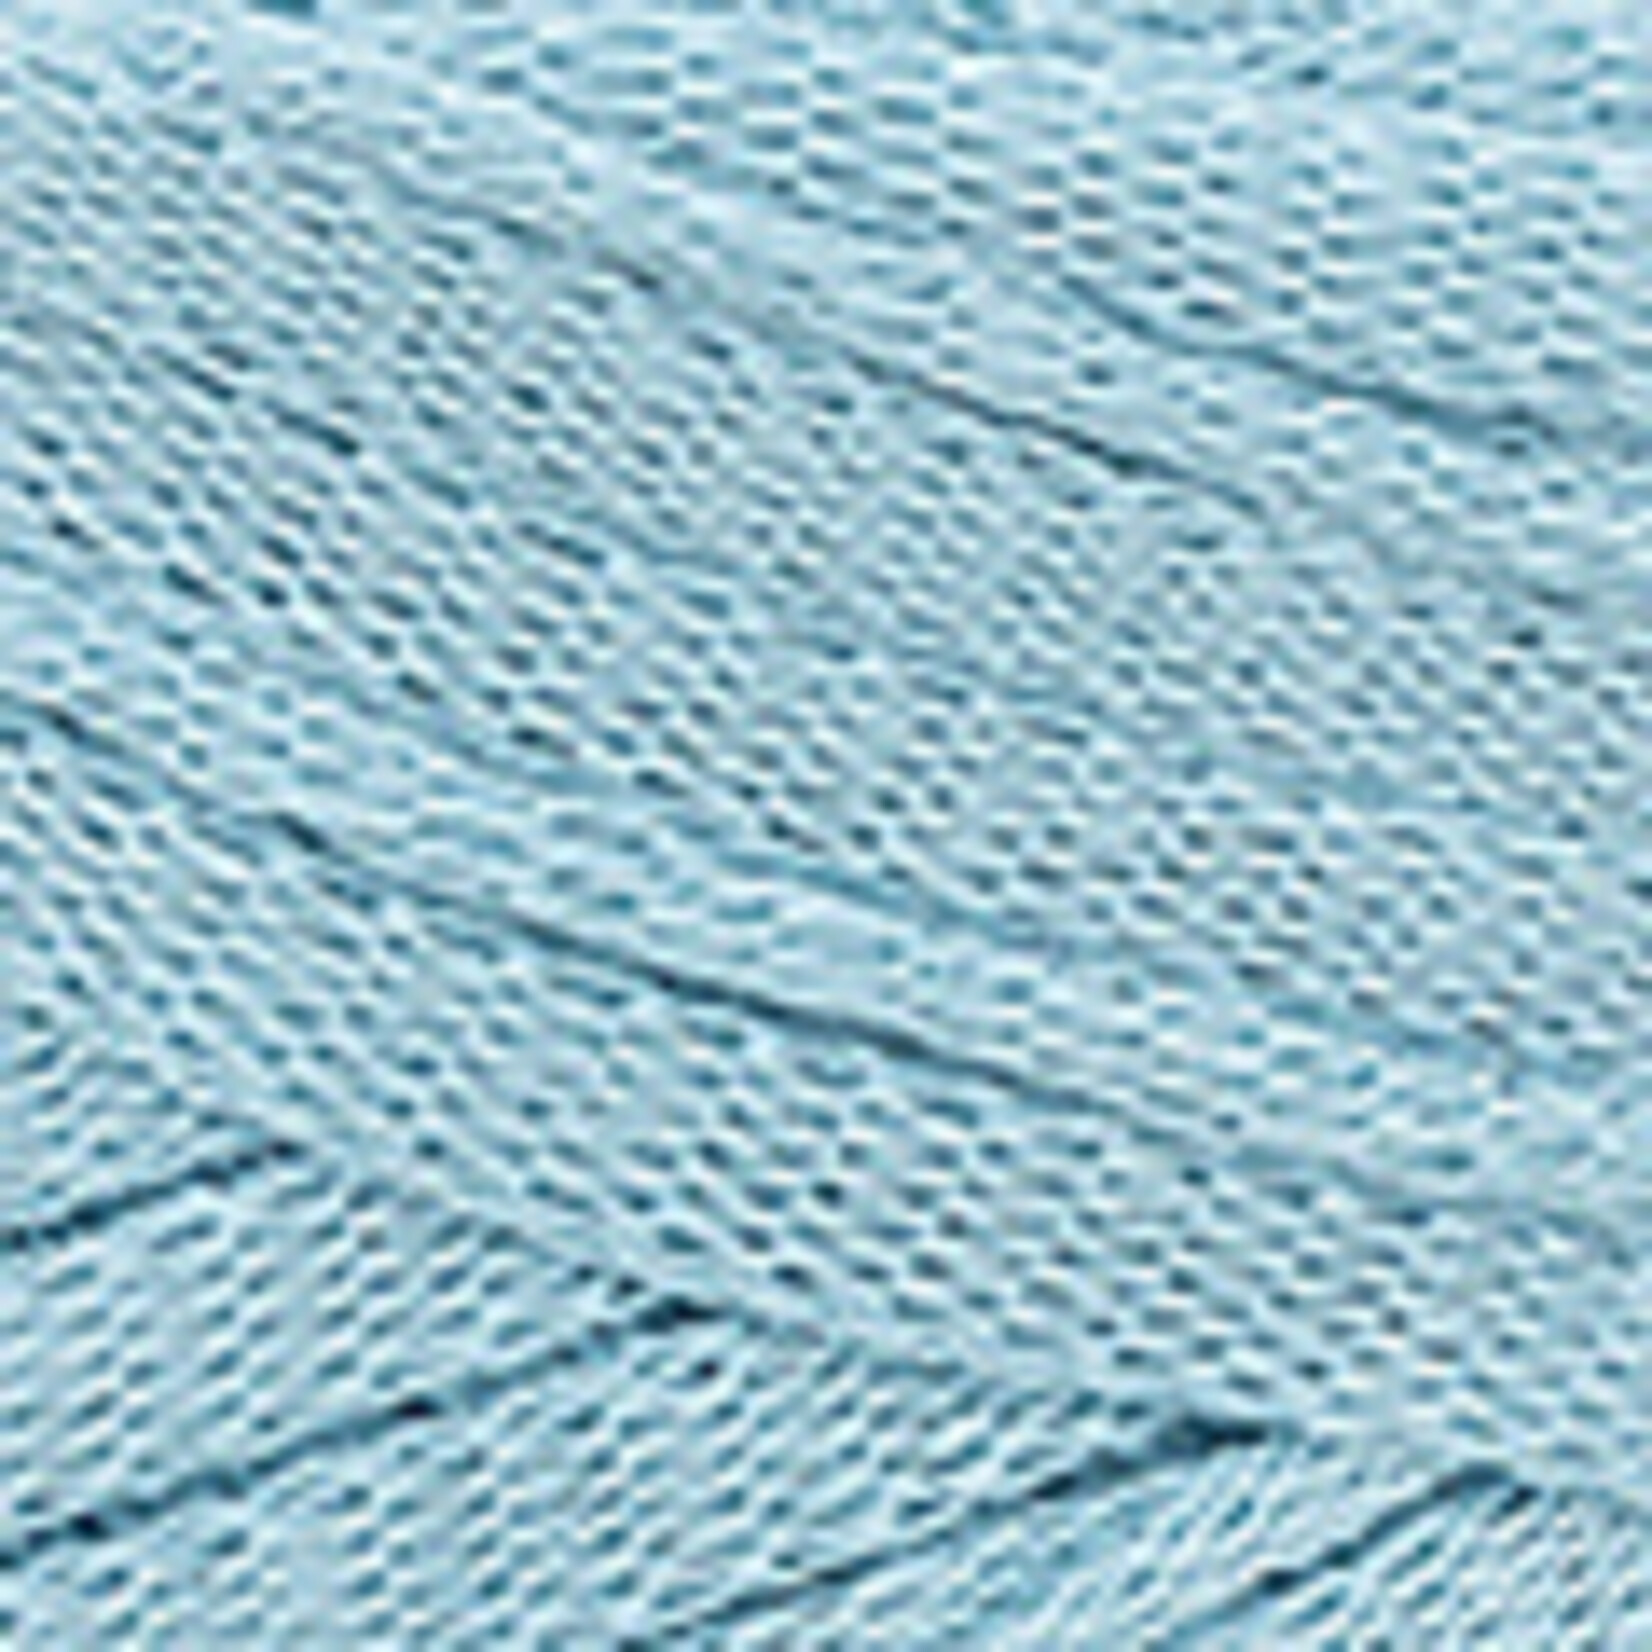 Katia Ecolife Ribbon 116 Waterblauw